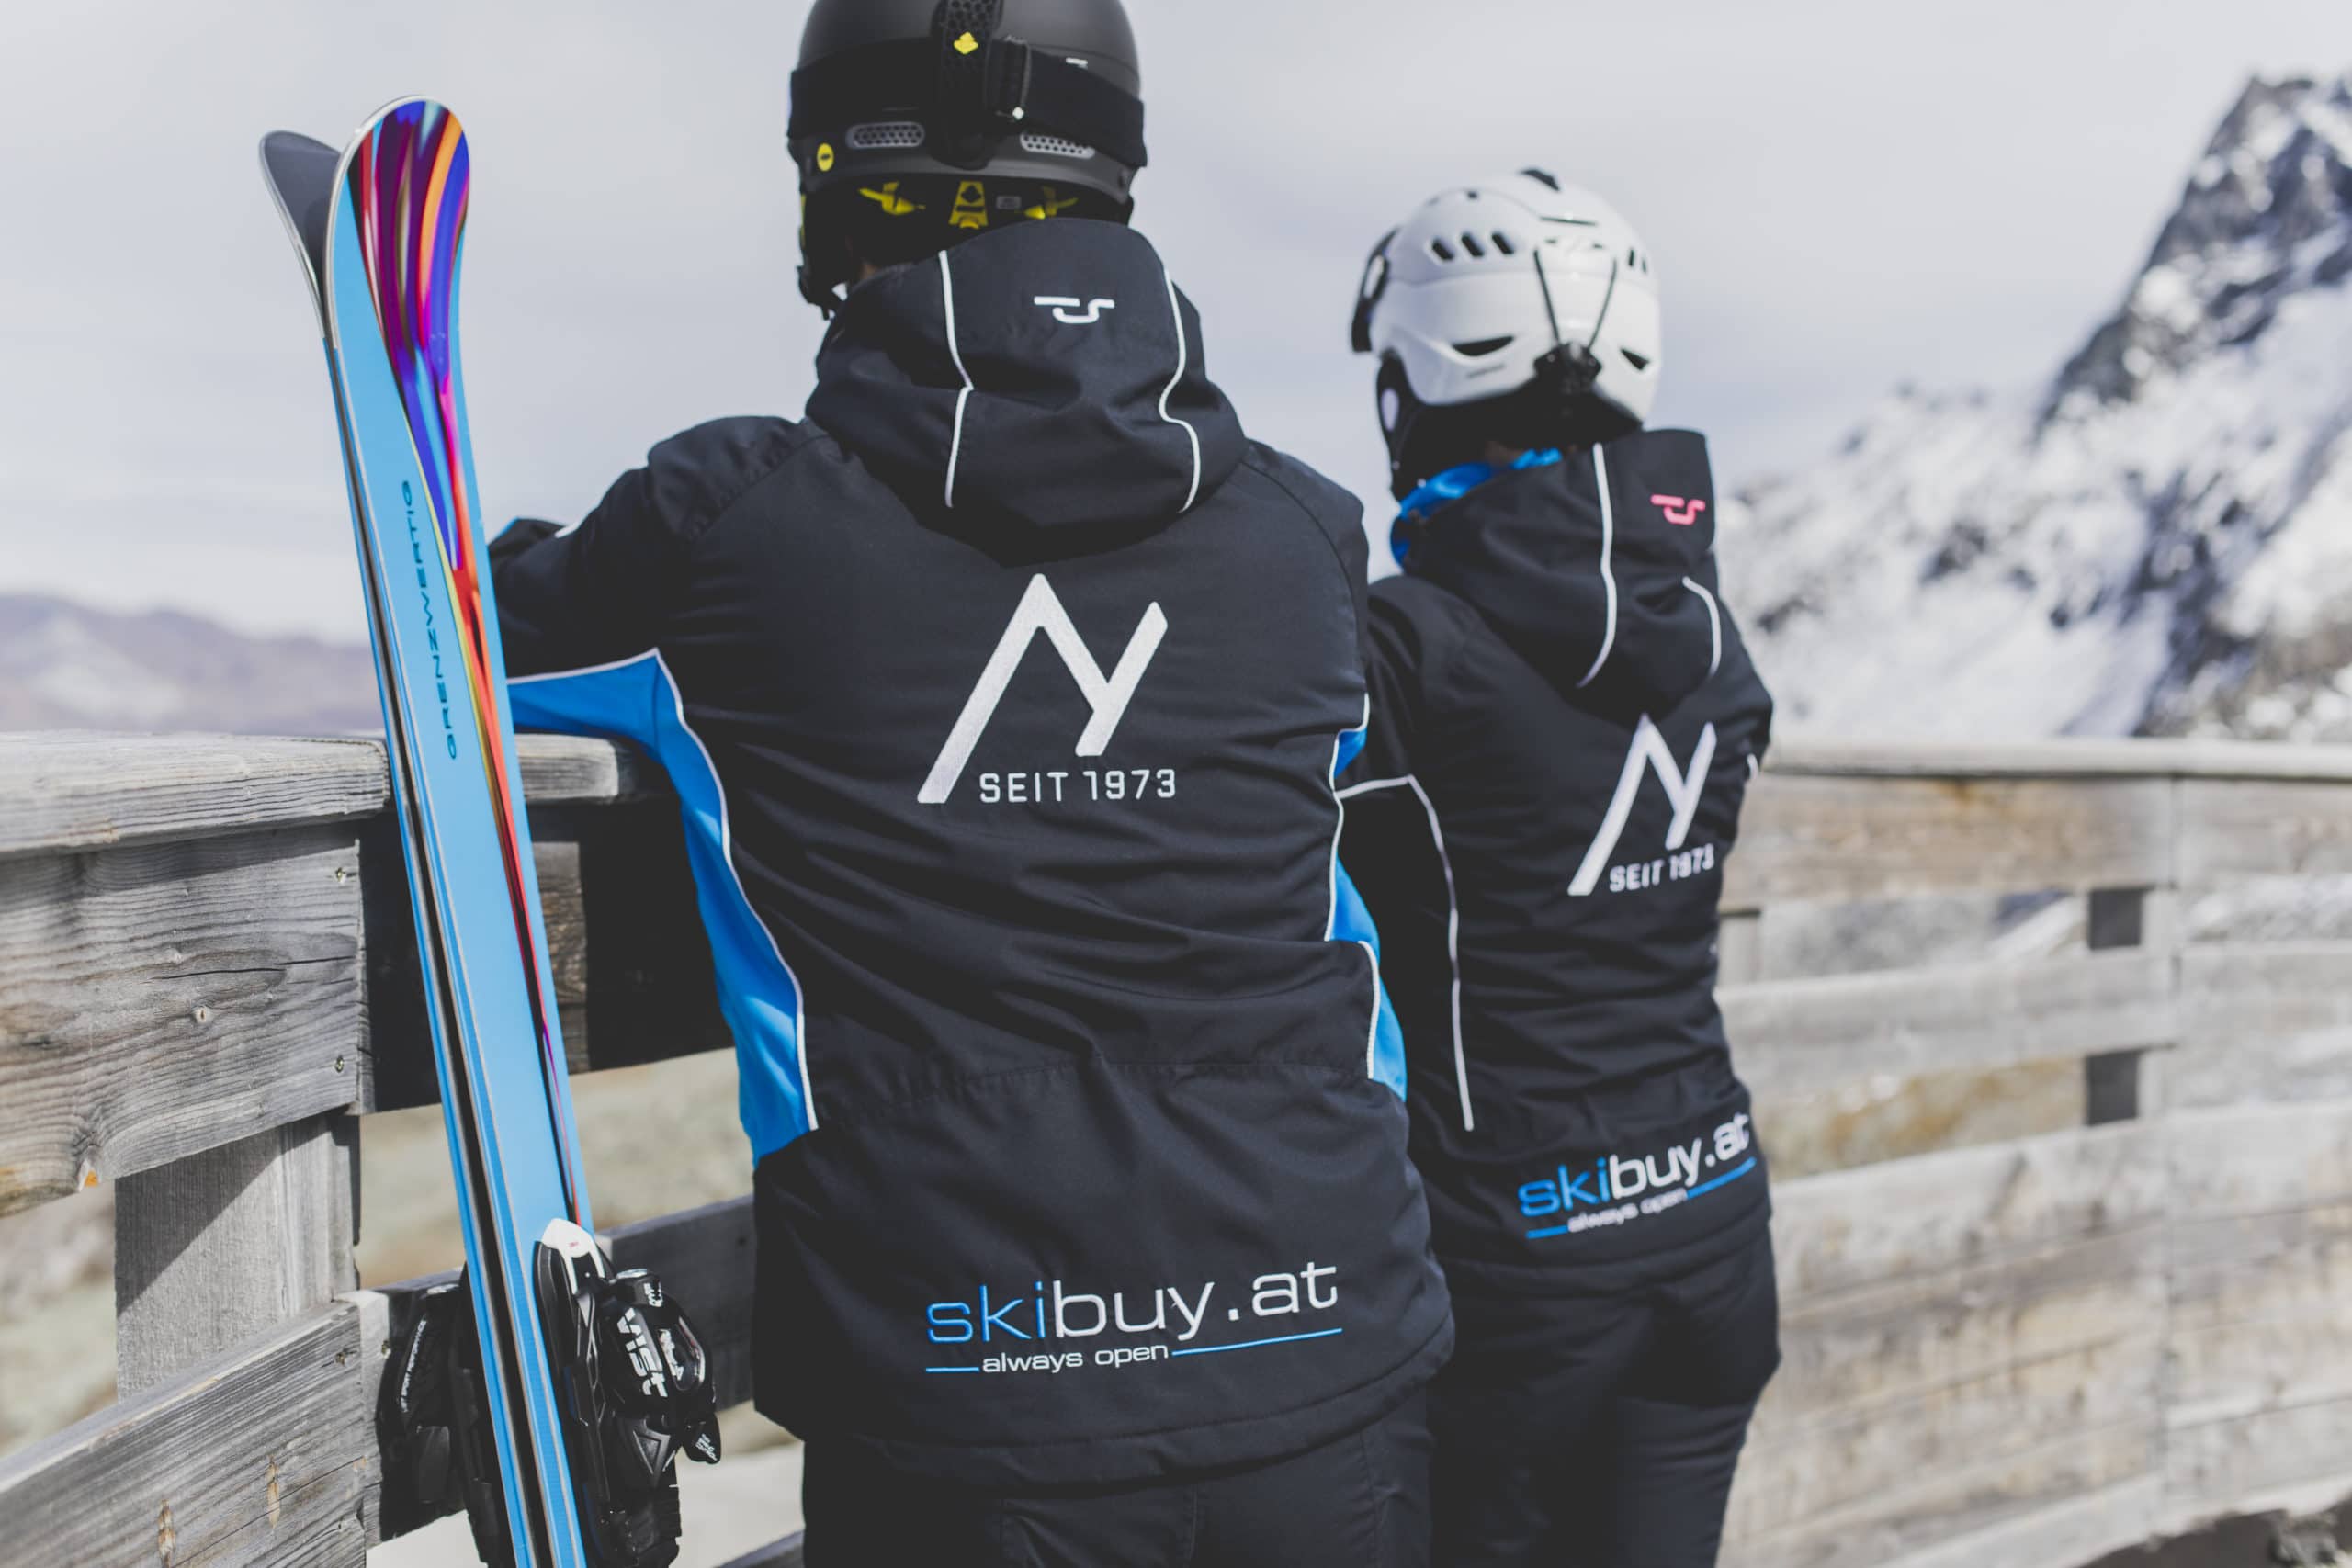 Voorkomen overeenkomst Overtreding Skibekleidung - Sport Nenner